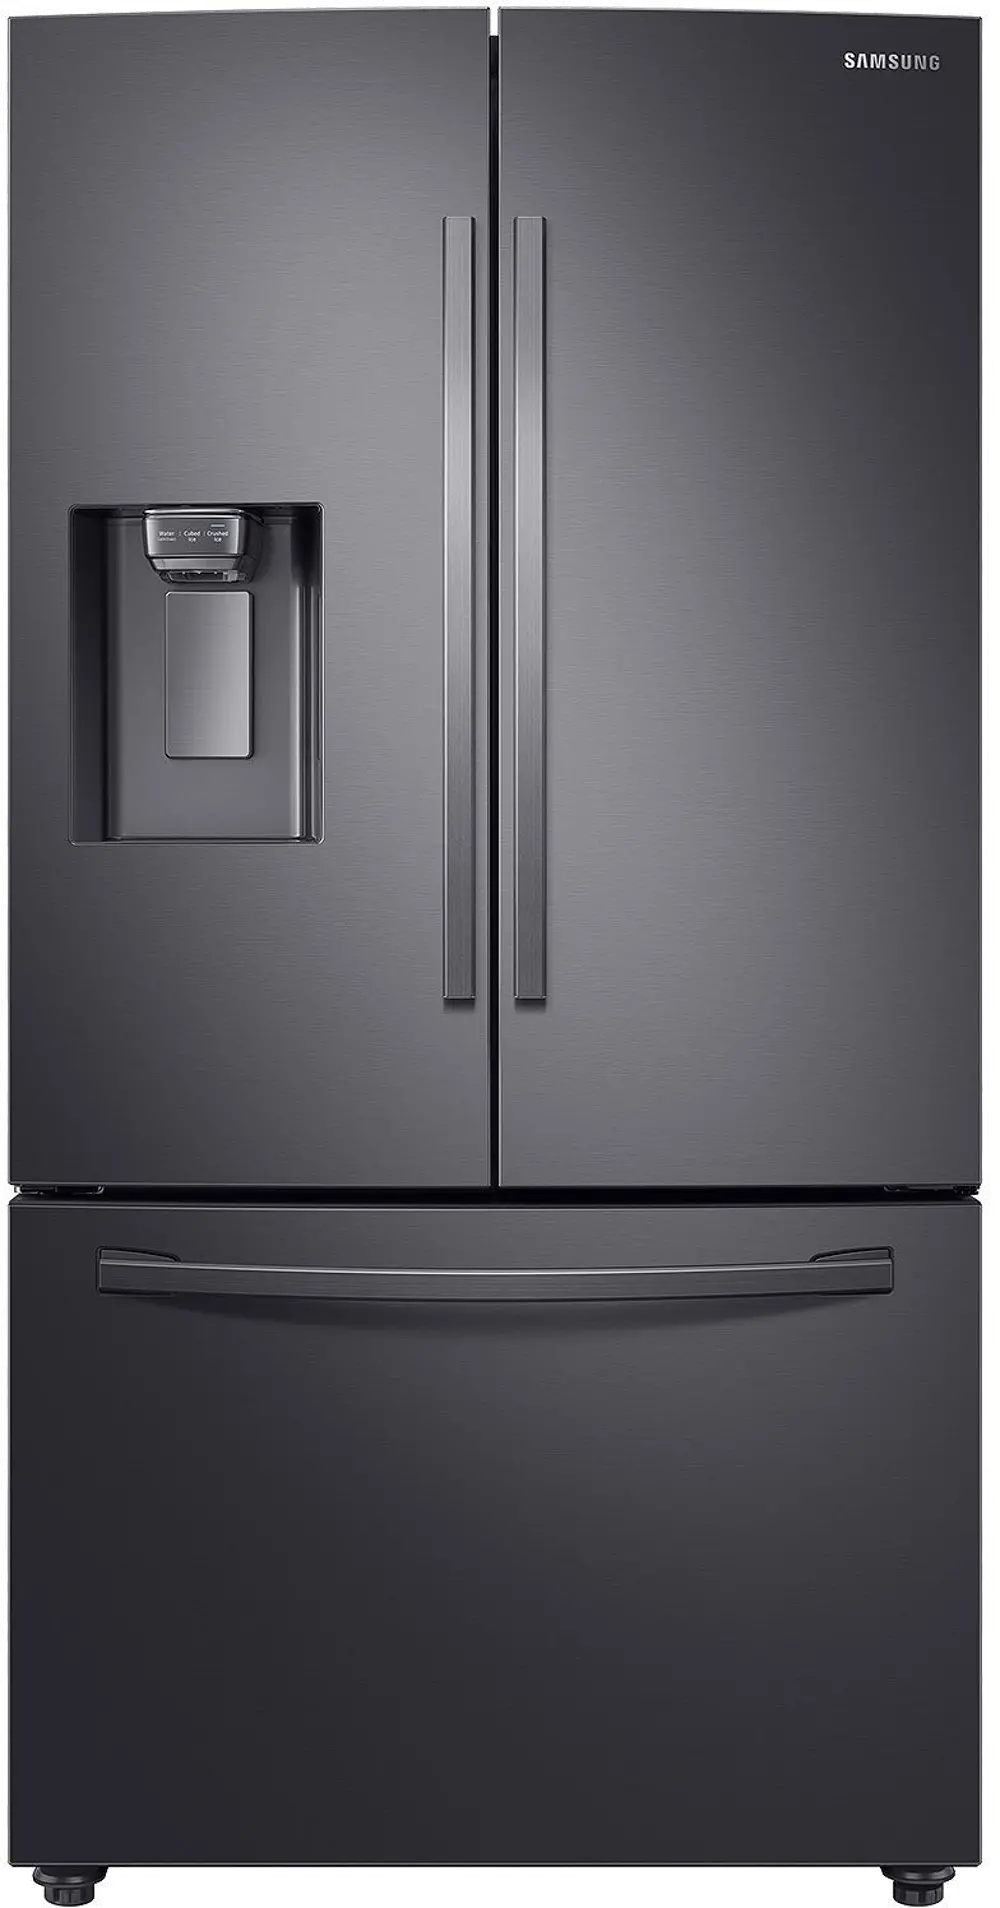 RF23R6201SG Samsung 22.6 cu ft French Door Refrigerator - Counter Depth Black Stainless Steel-1